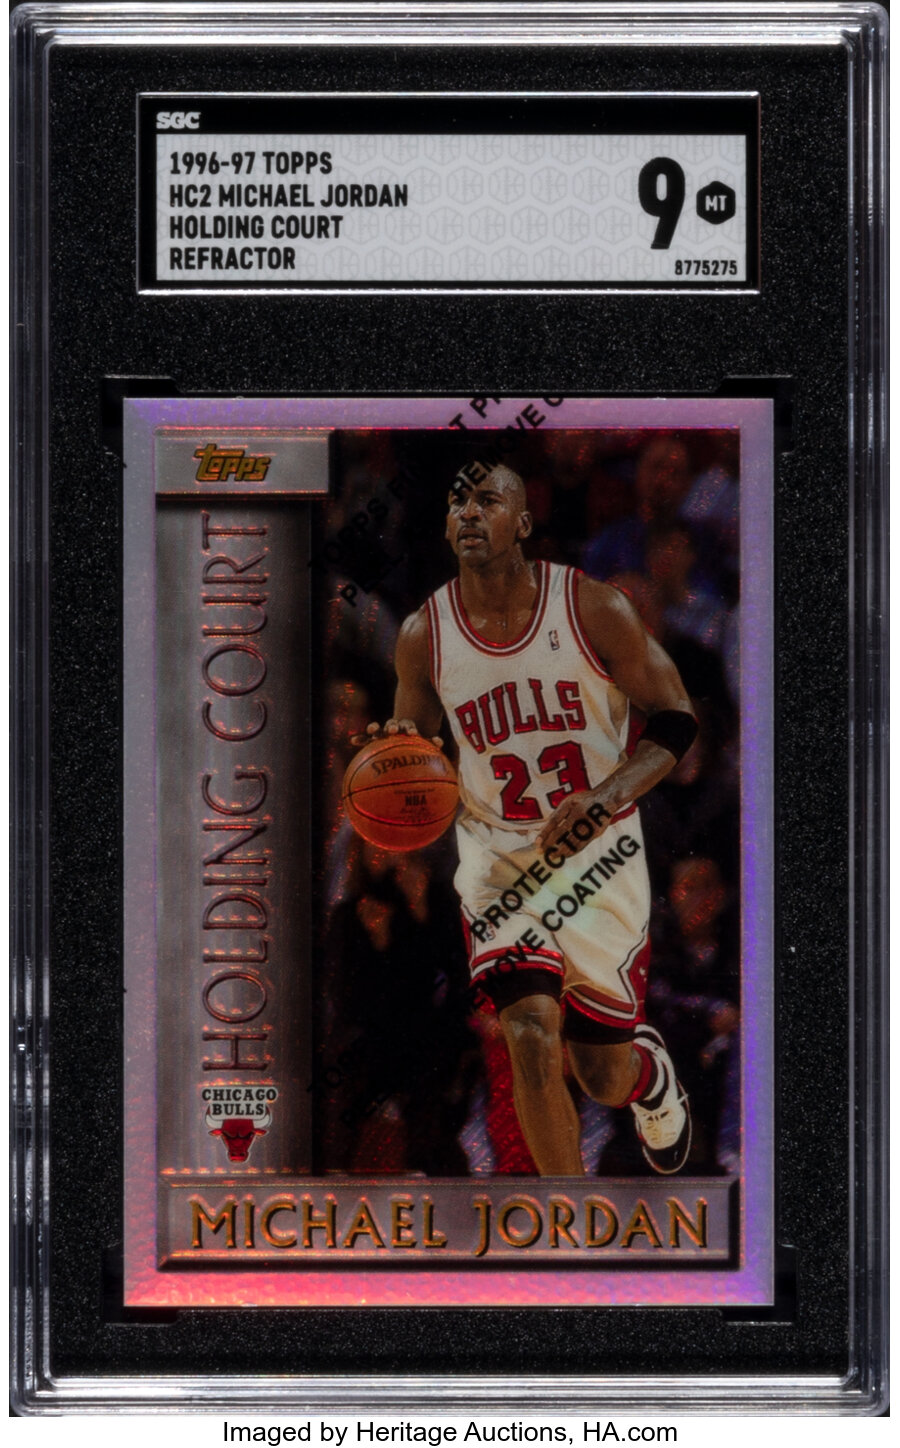 1996 Topps Michael Jordan (Holding Court w/Coating-Refractor) #HC2 SGC Mint 9